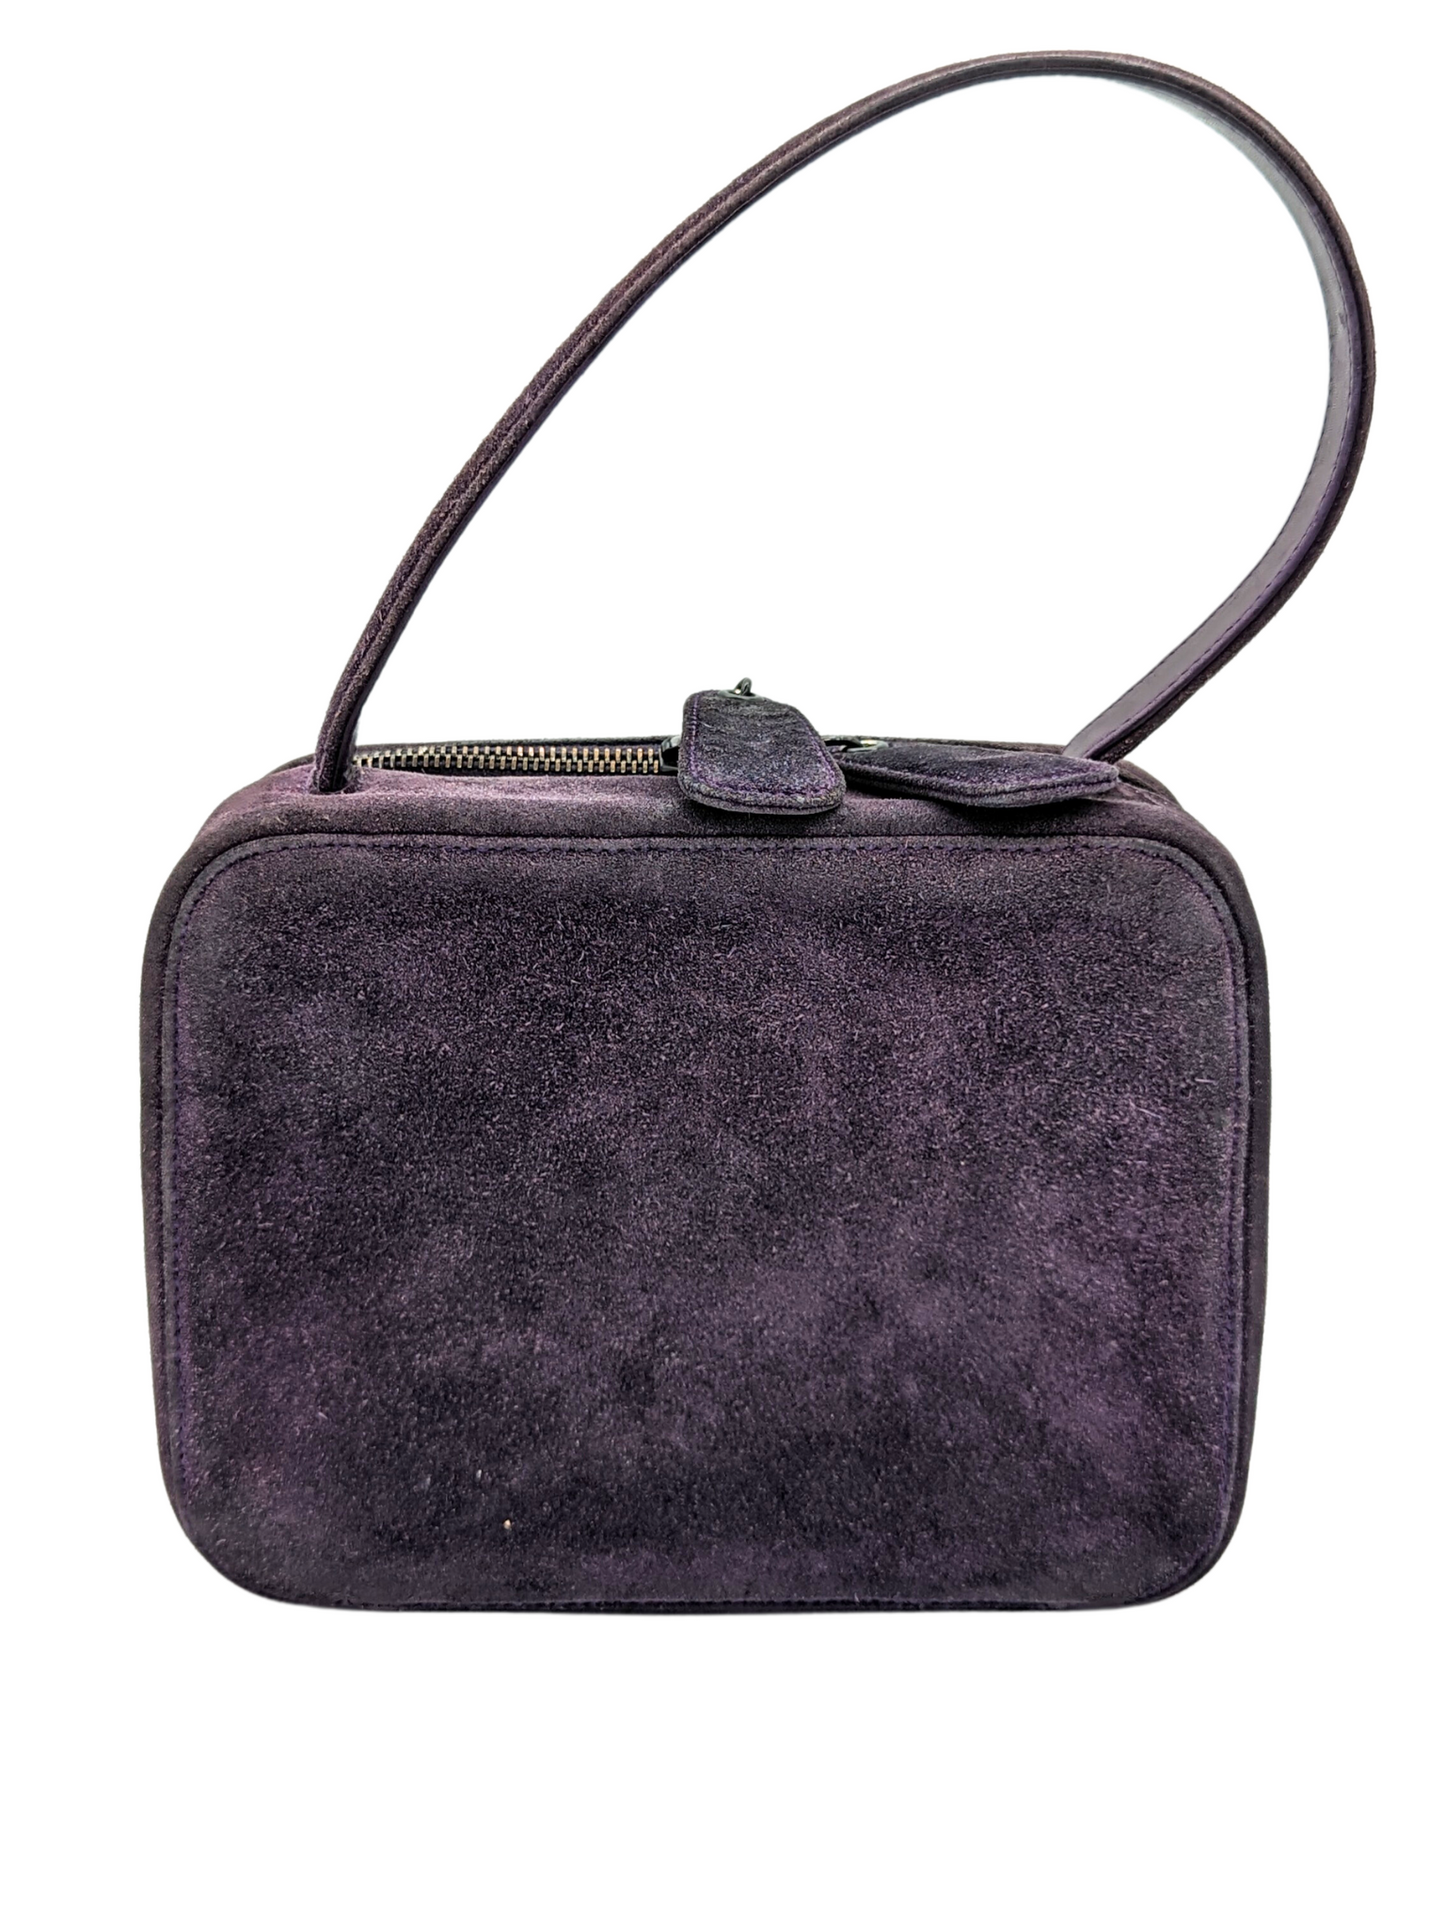 Chanel Vintage Purple Suede Purse